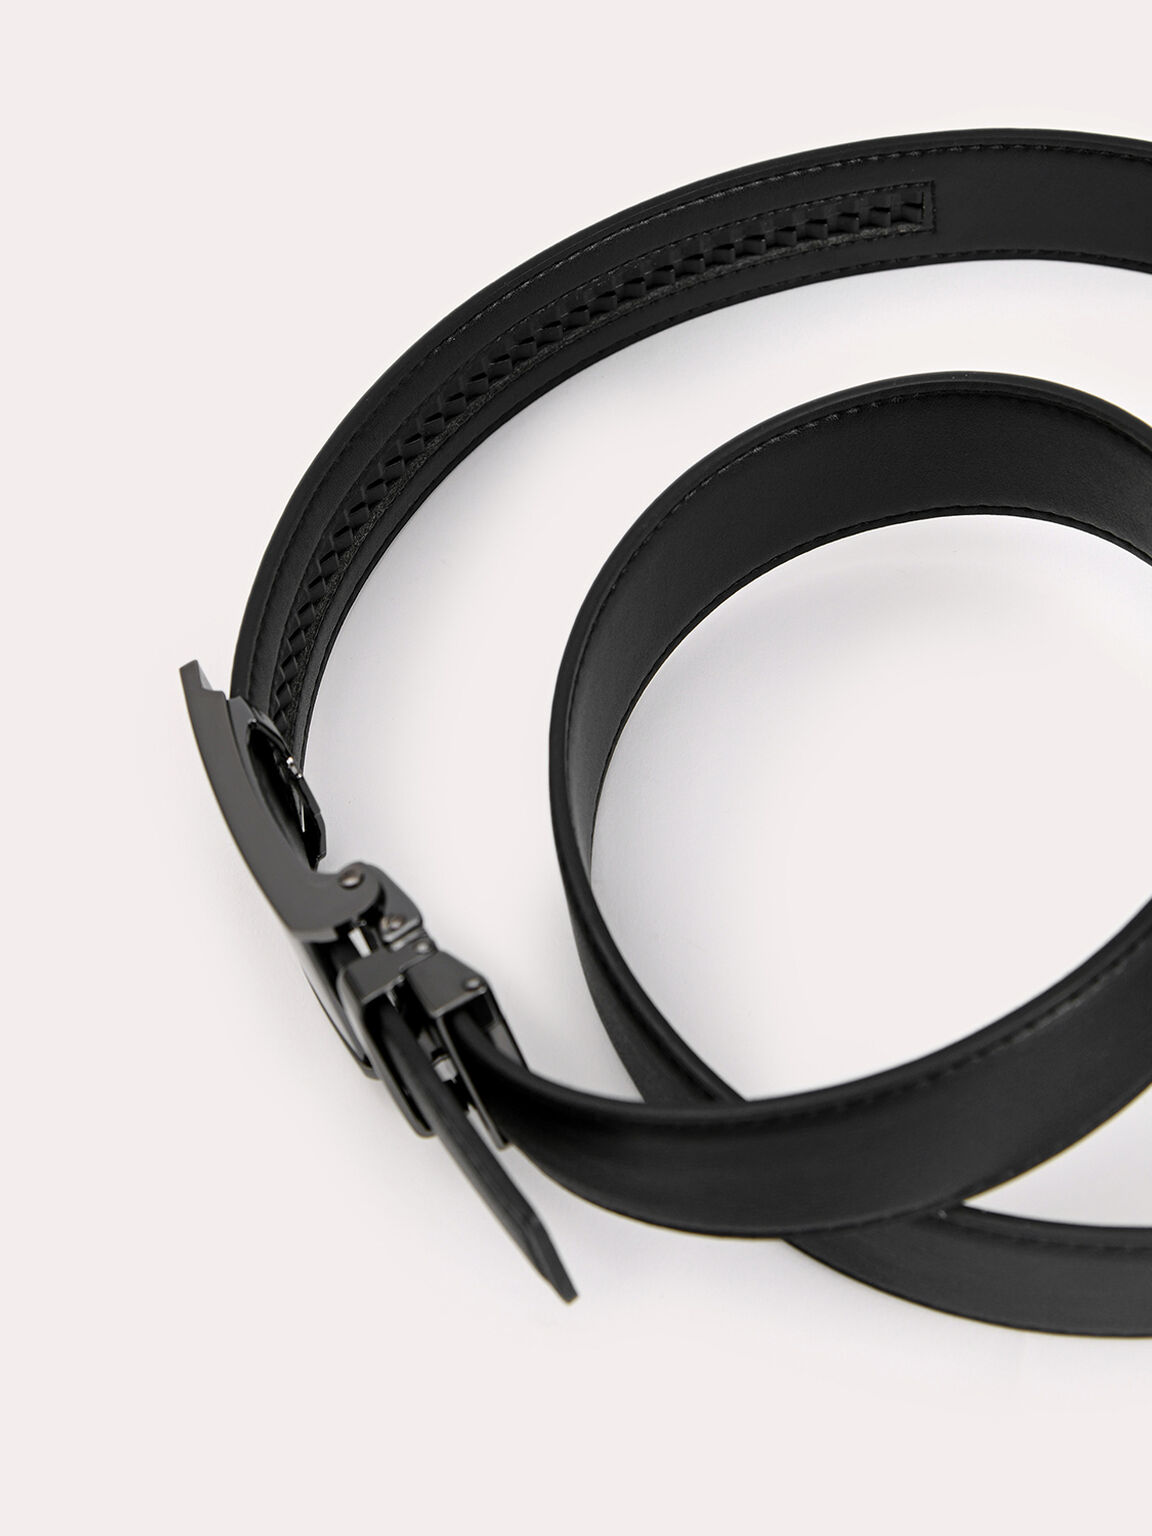 Leather Automatic Buckle Belt, Black